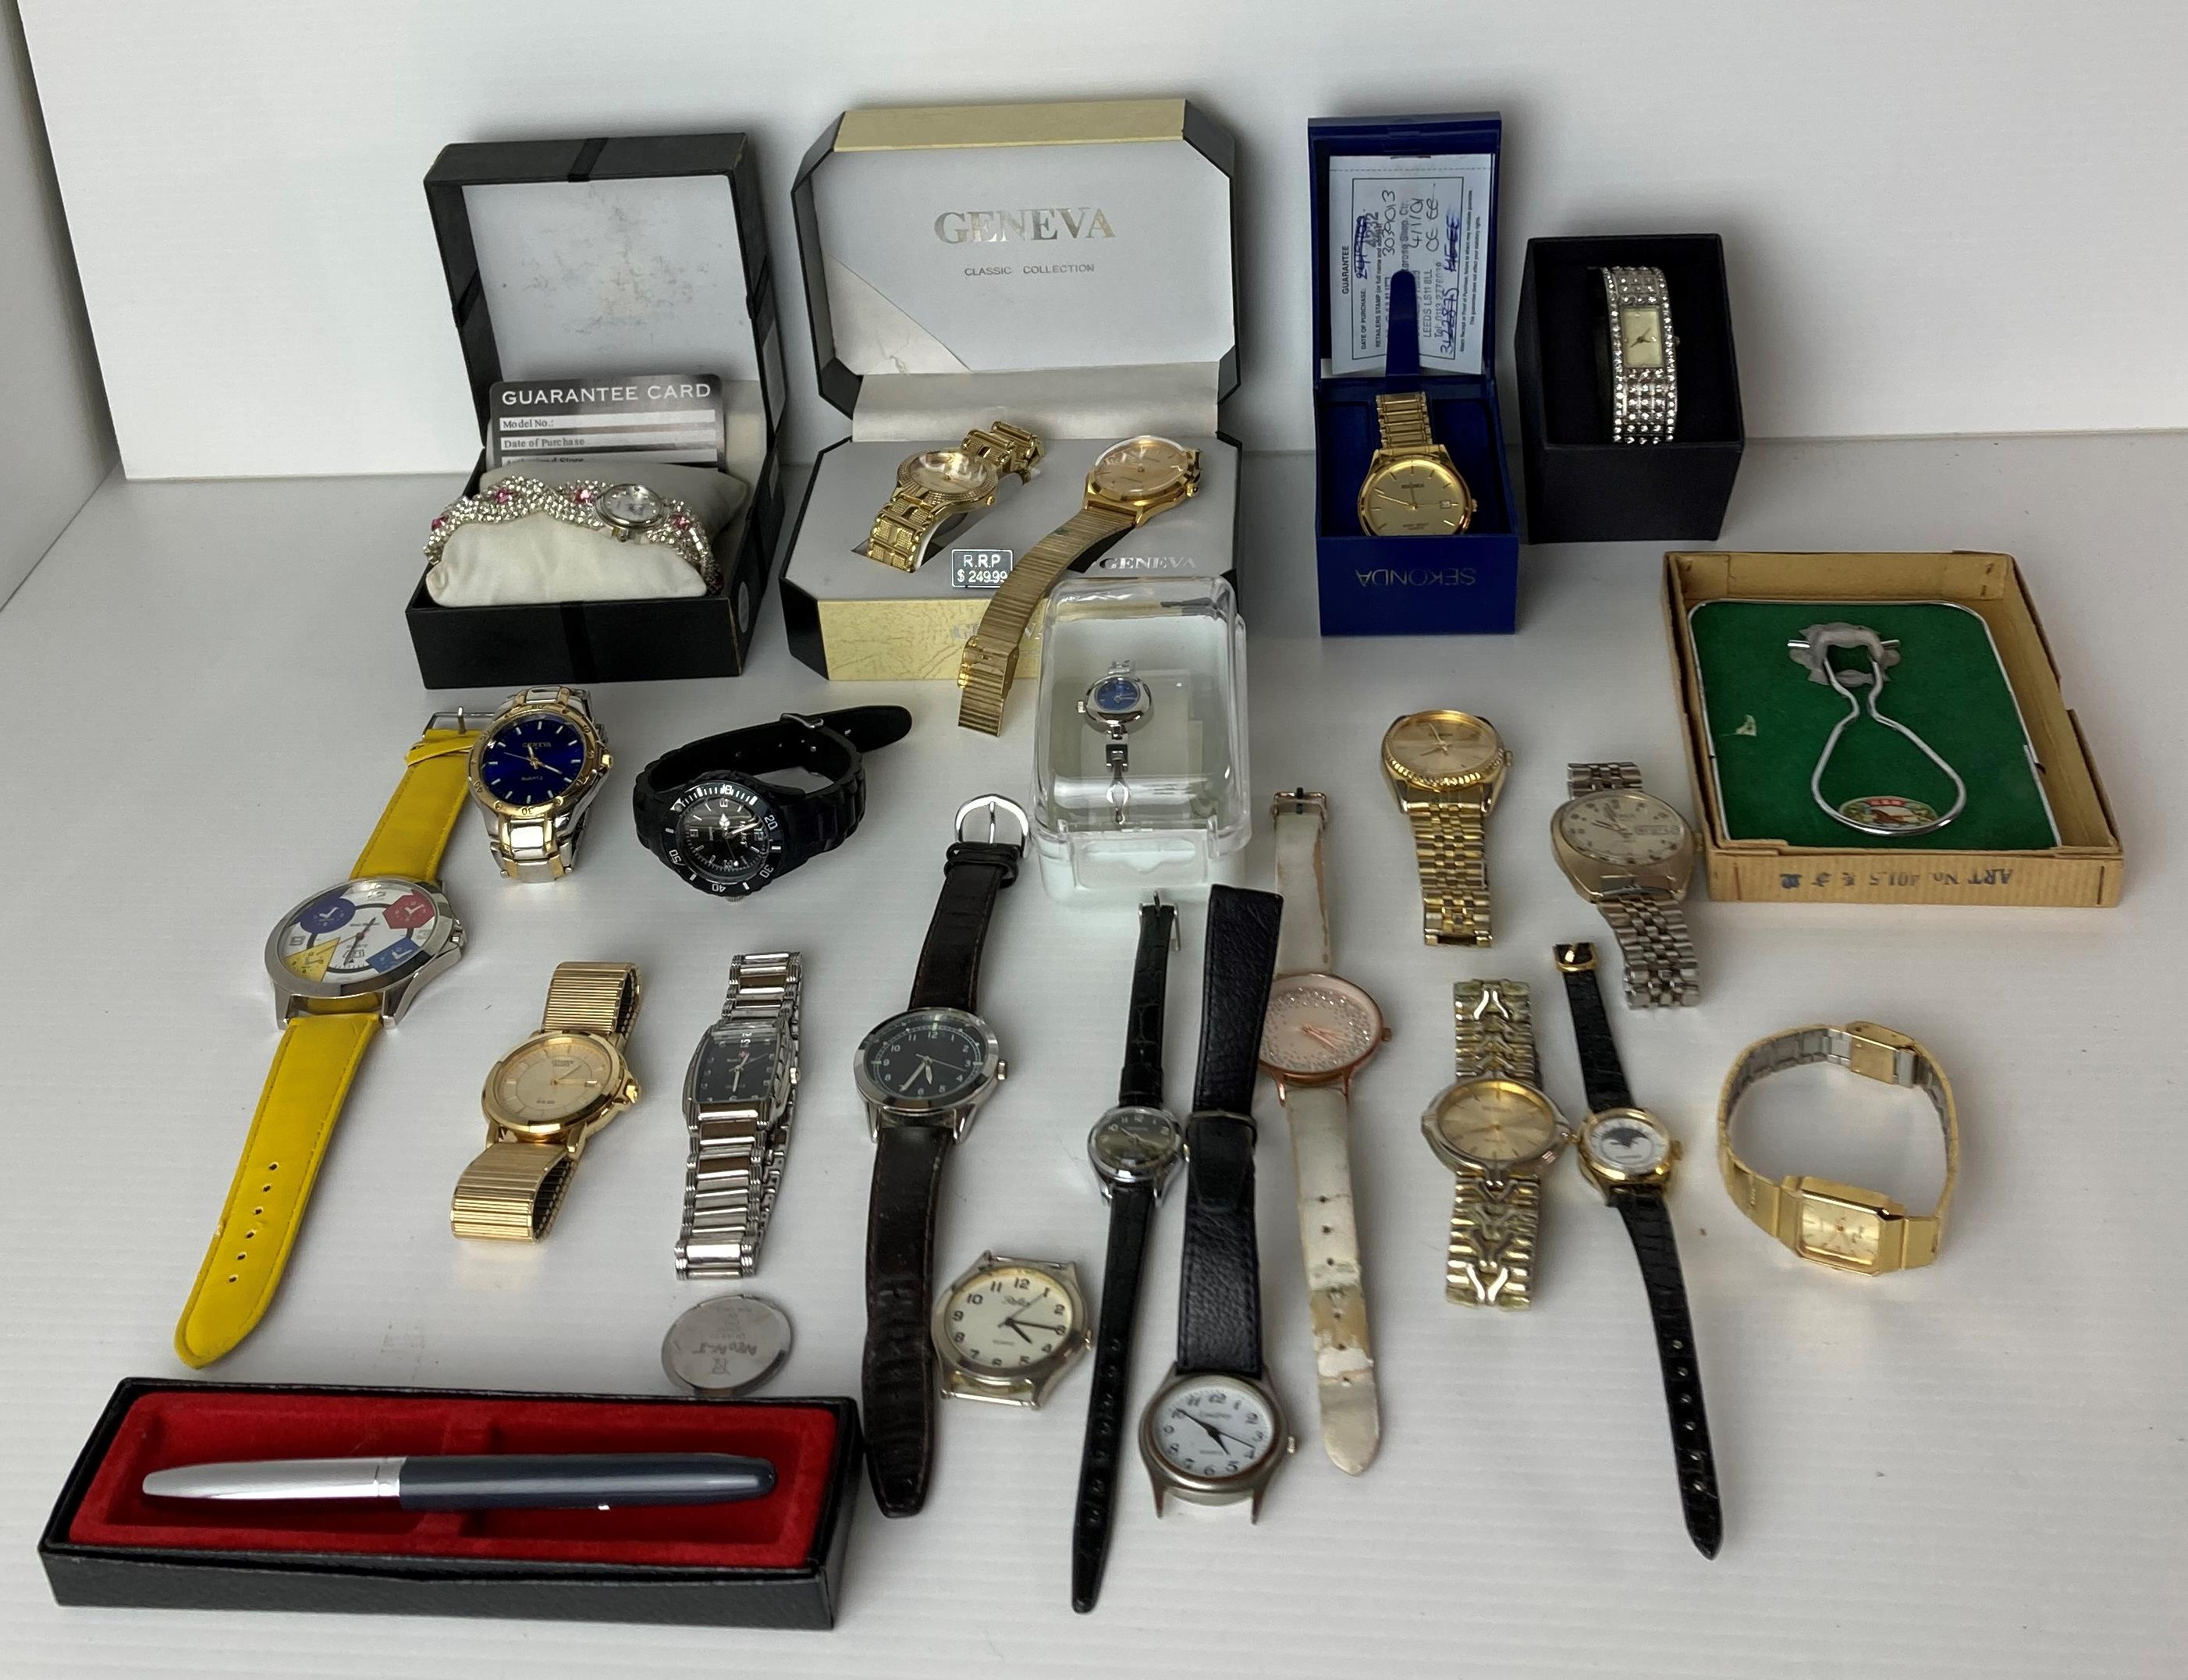 Contents to tray - 20 assorted watches by Citizen, Sekonda, vintage Sekonda Automatic, Geneva,